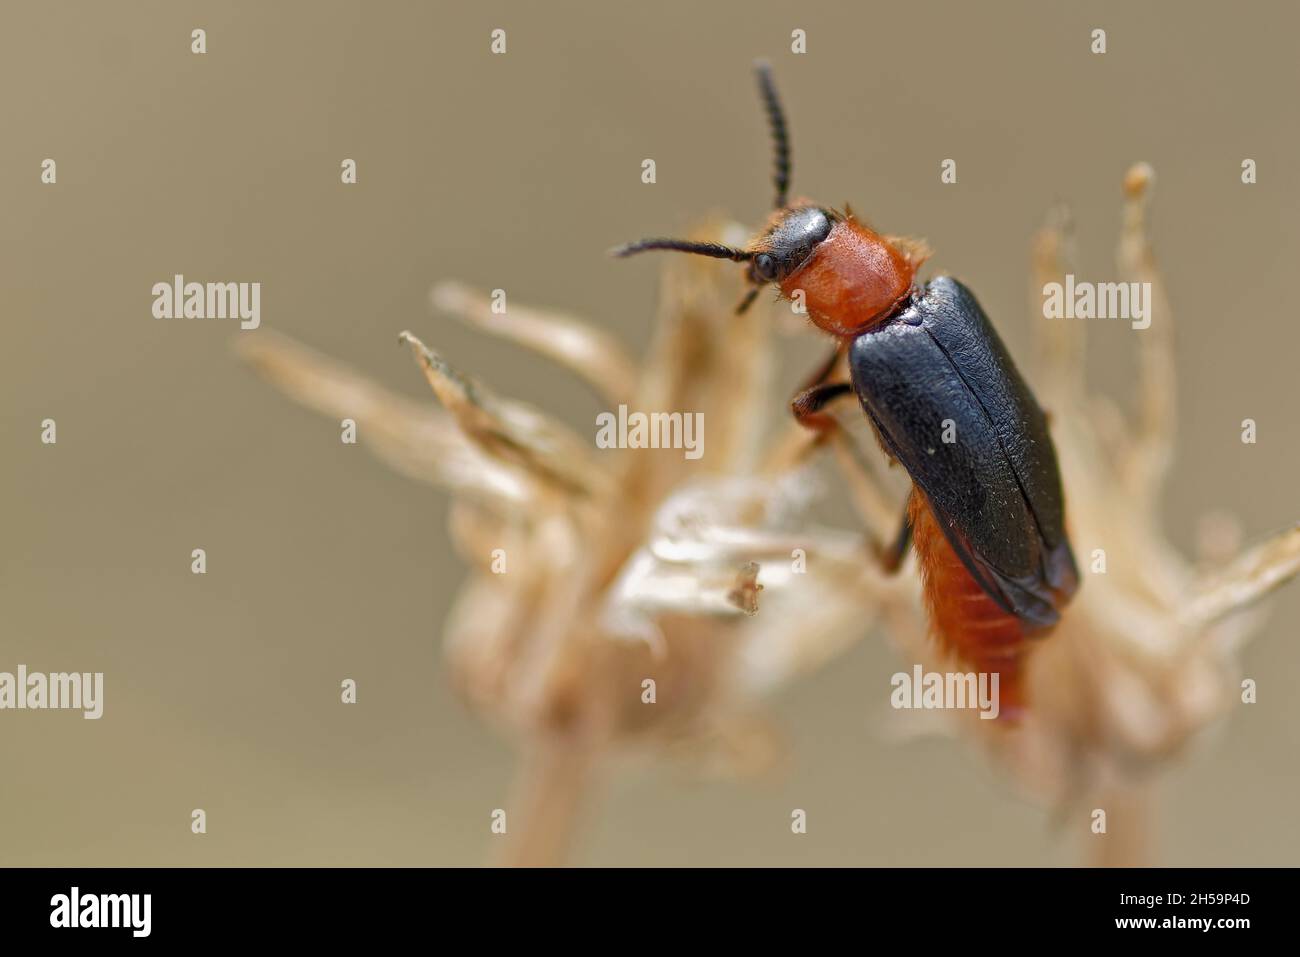 Cantharis pellucida, comunemente chiamato 'scarabeo soldato'. Foto Stock